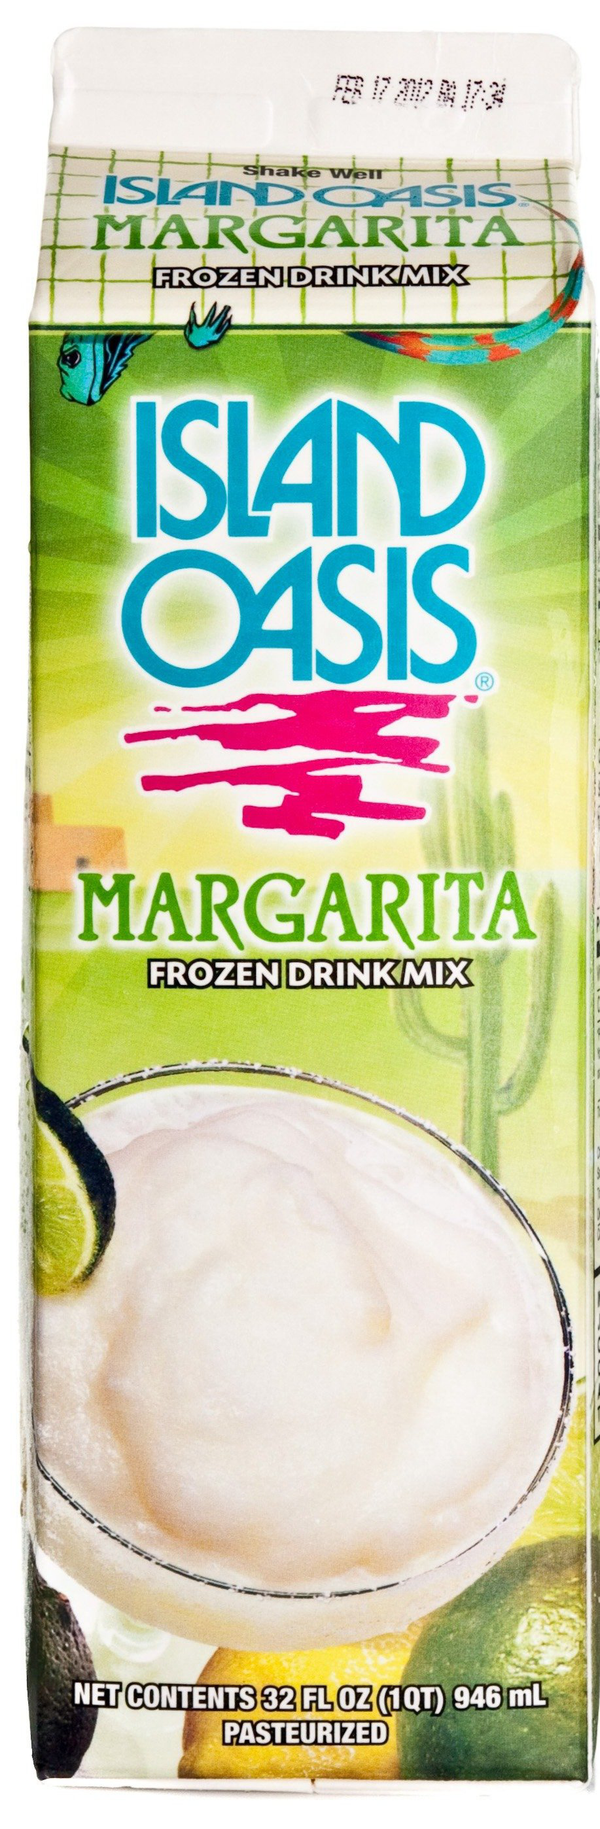 Margarita Frozen Drink Mix, 12/32oz Island Oasis